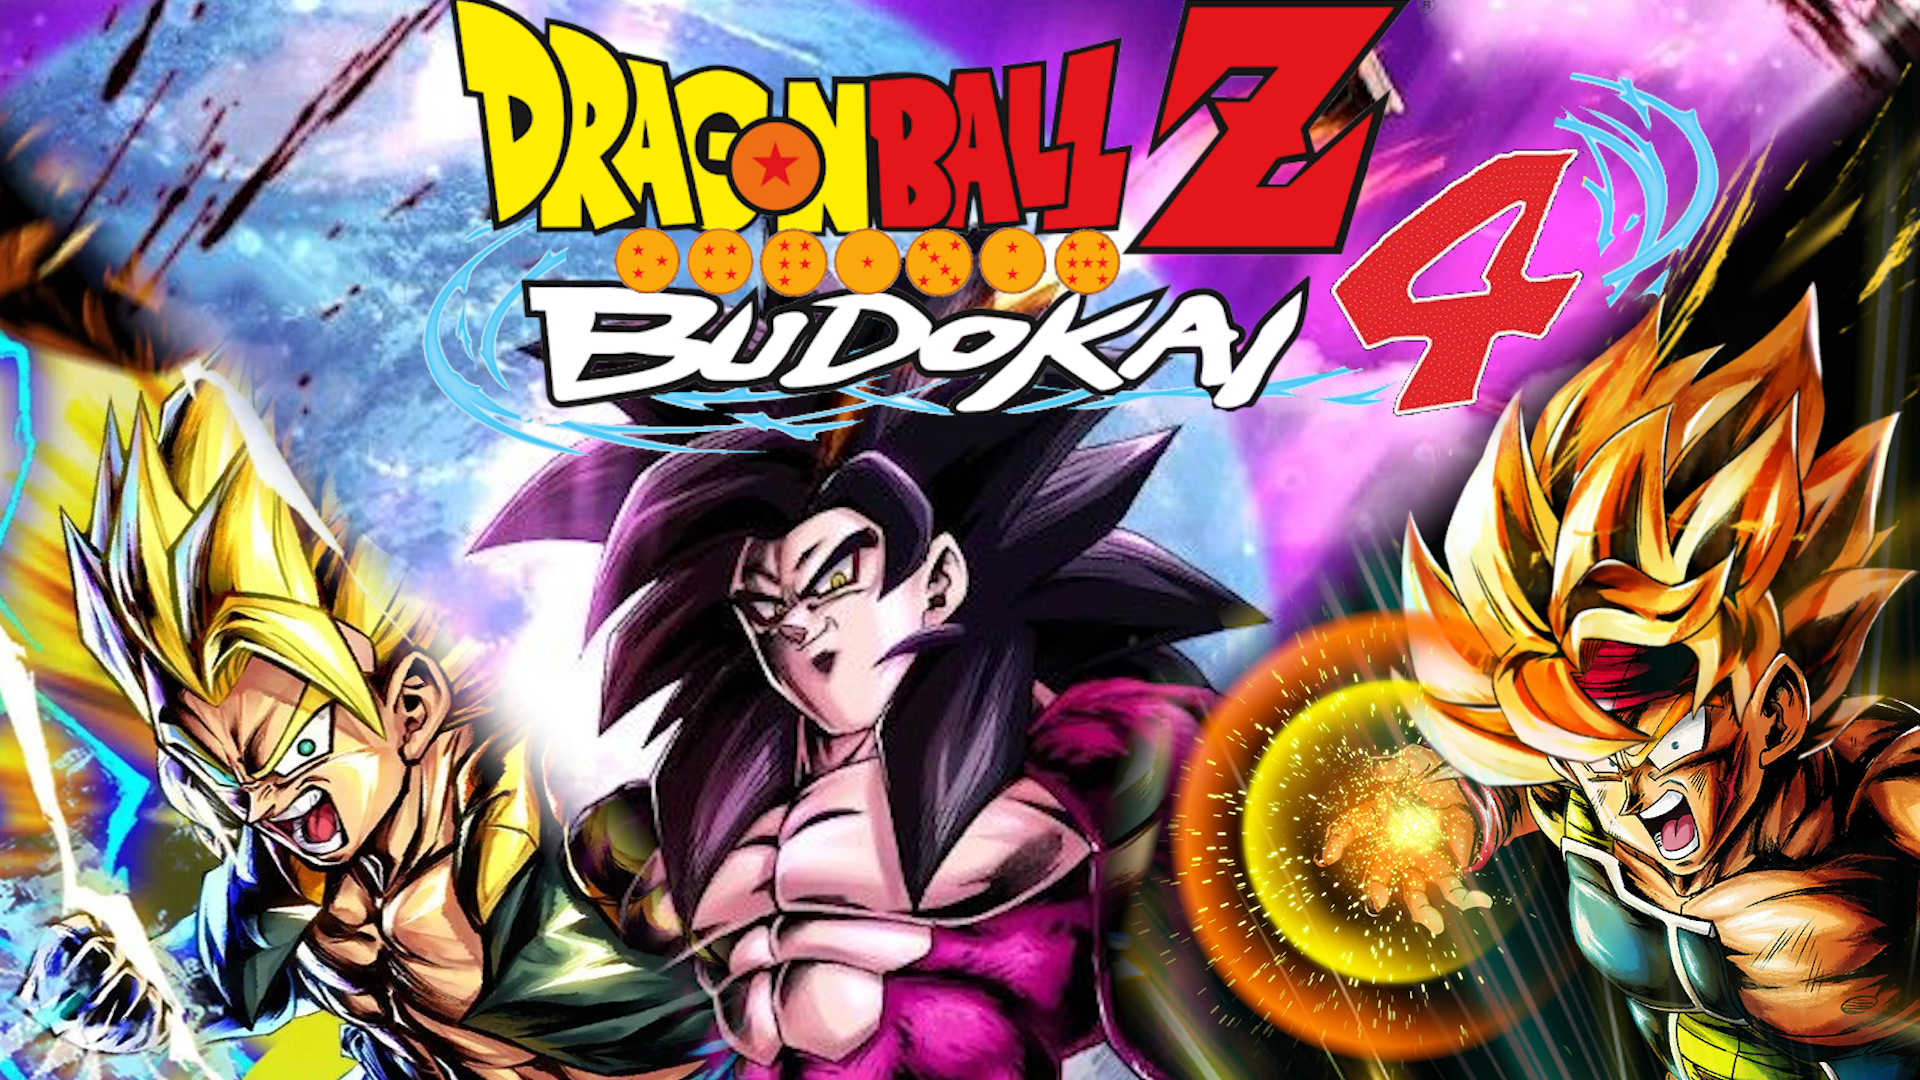 Dragon Ball Z Budokai 4 v0.5 Demo file - ModDB